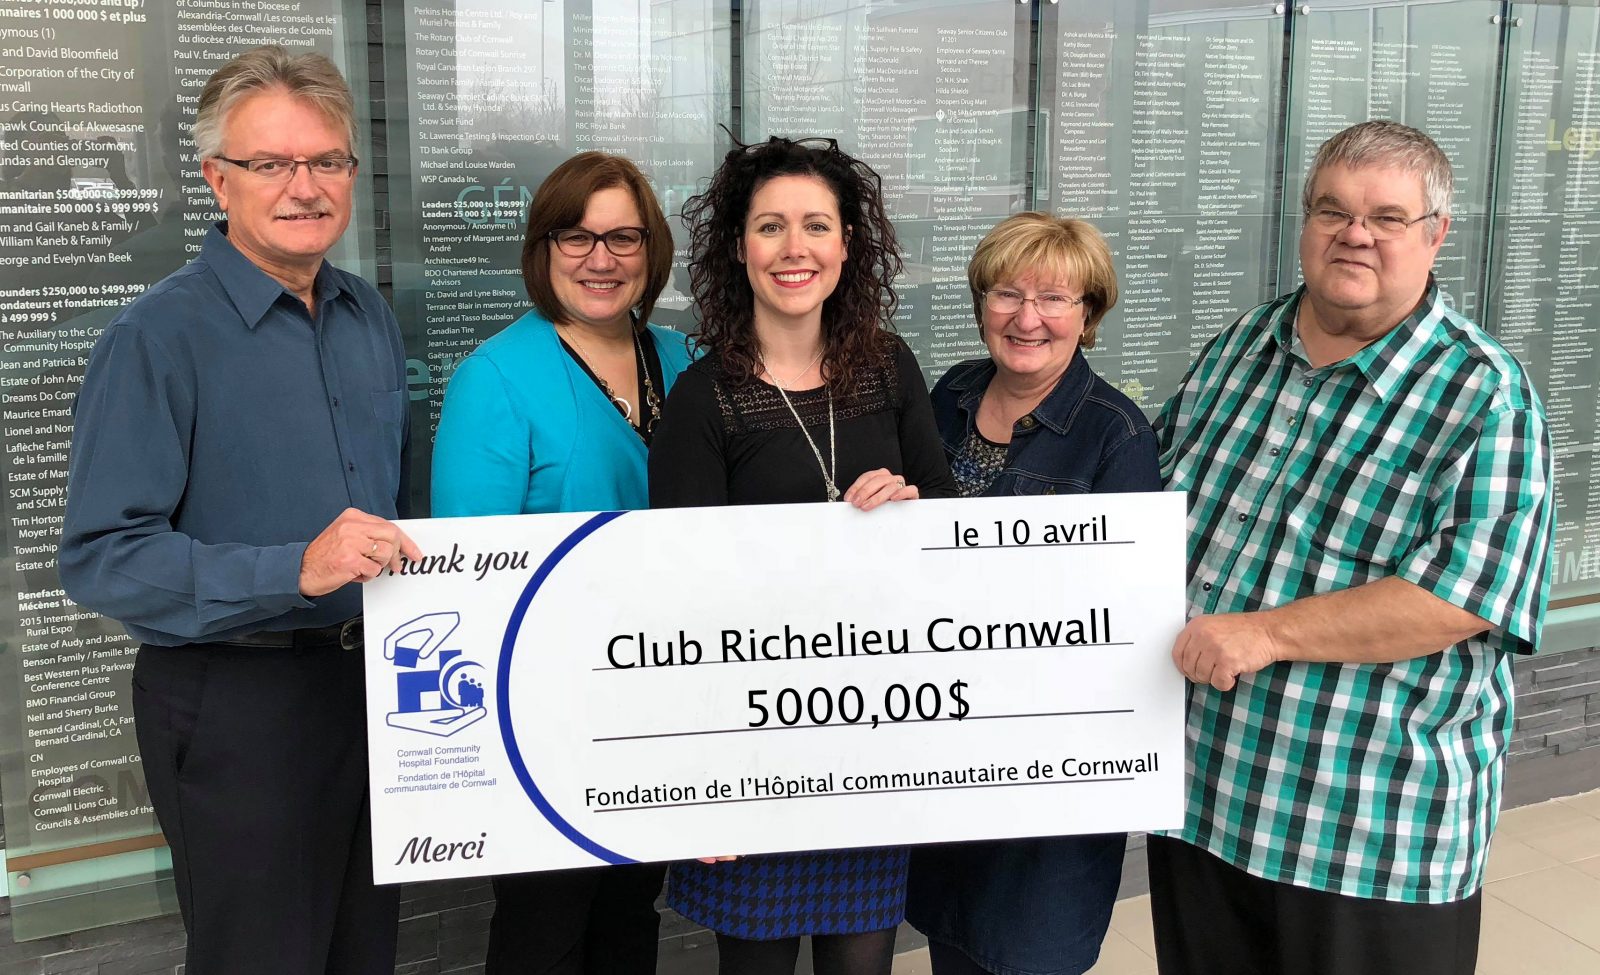 Club Richelieu-Cornwall supports CCHF